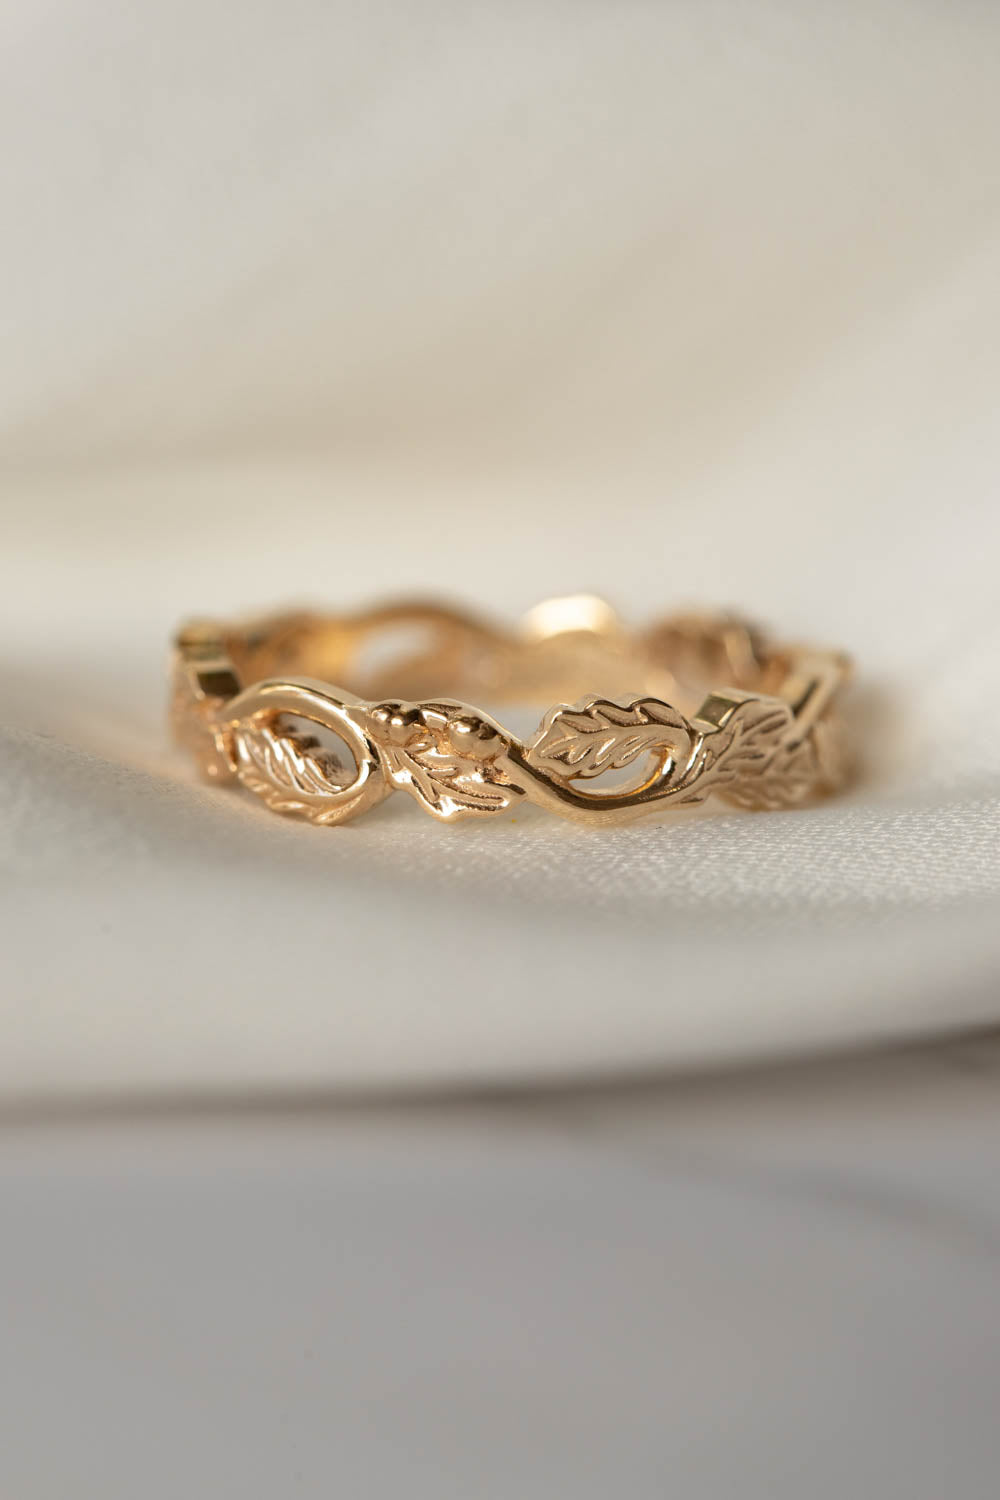 Oak leaves gold wedding band, comfort fit unisex wedding band 4 mm - Eden Garden Jewelry™